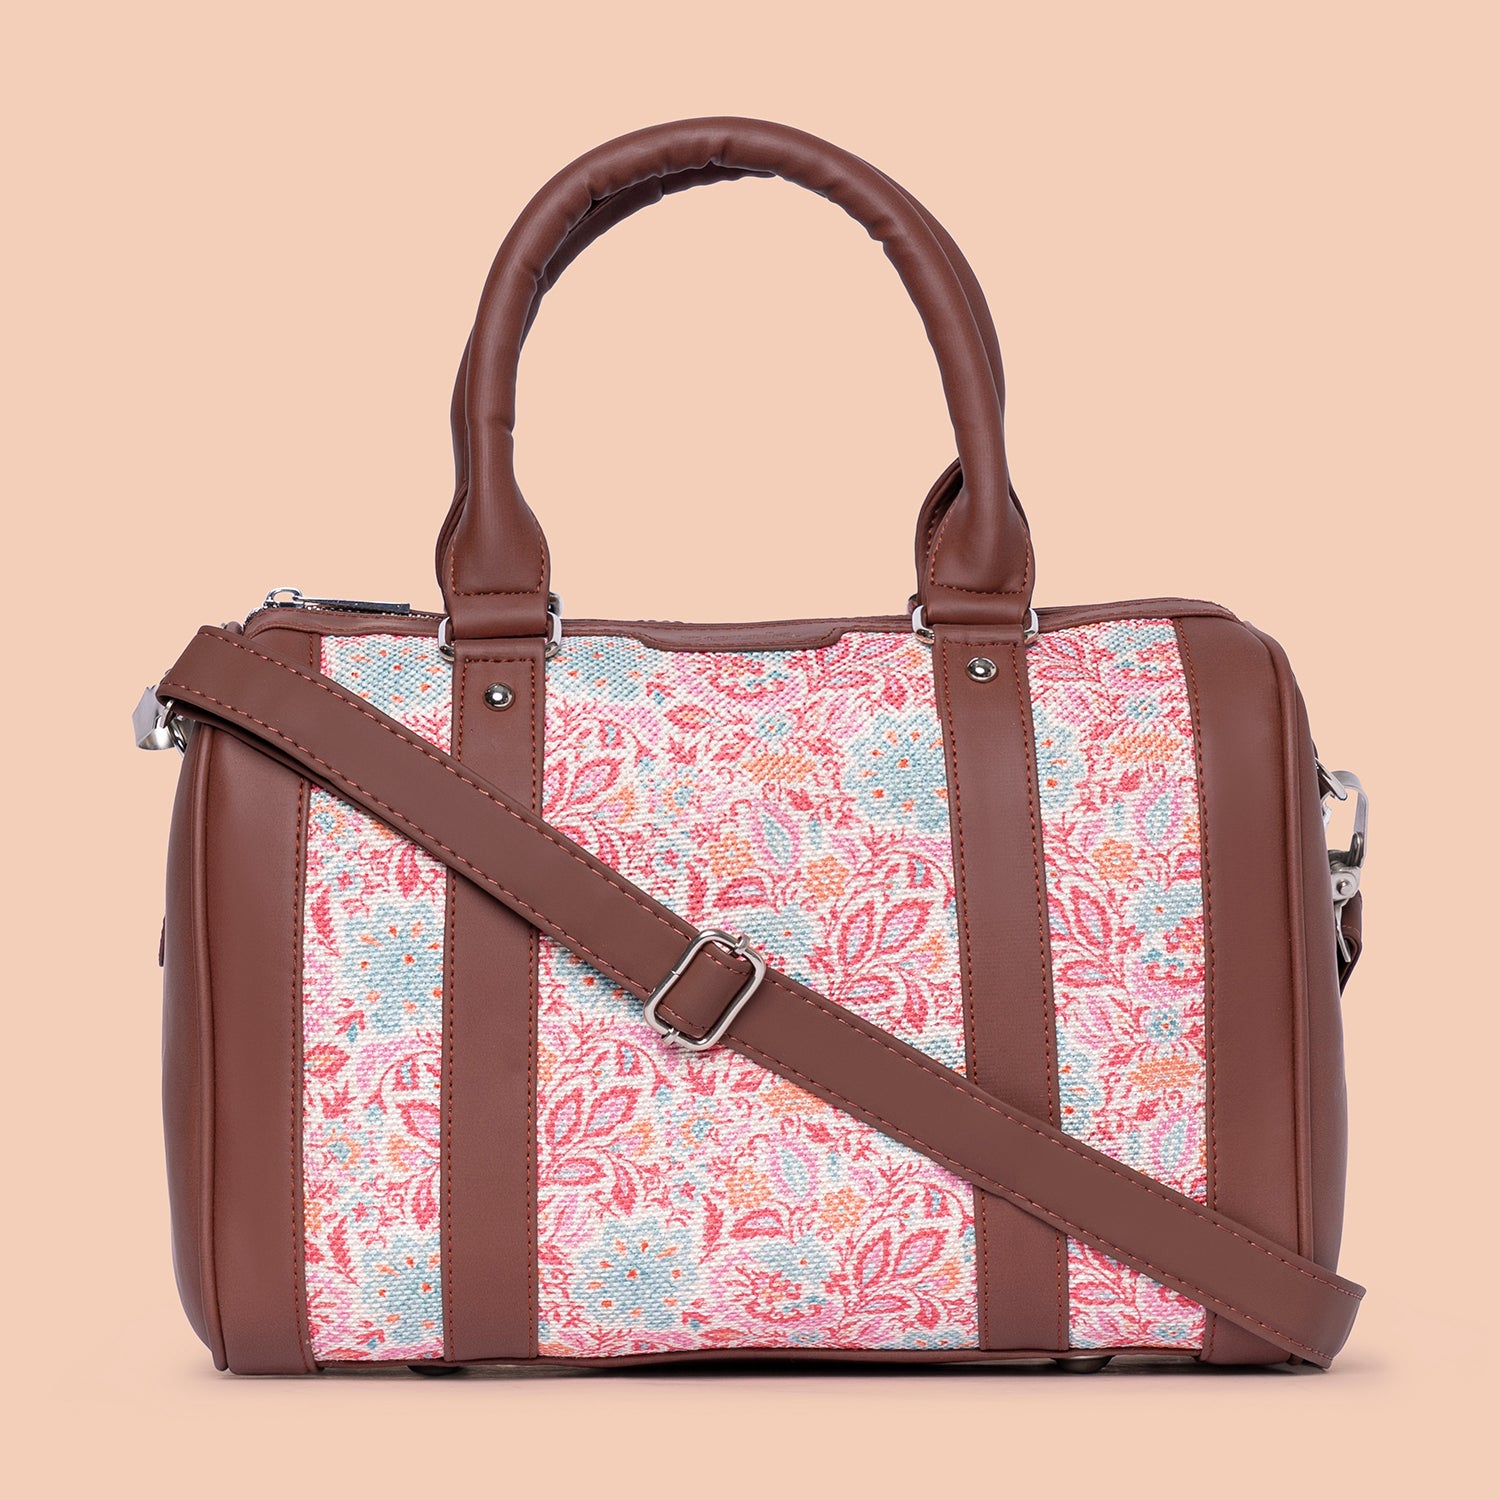 Mangalore Blossoms Handbag